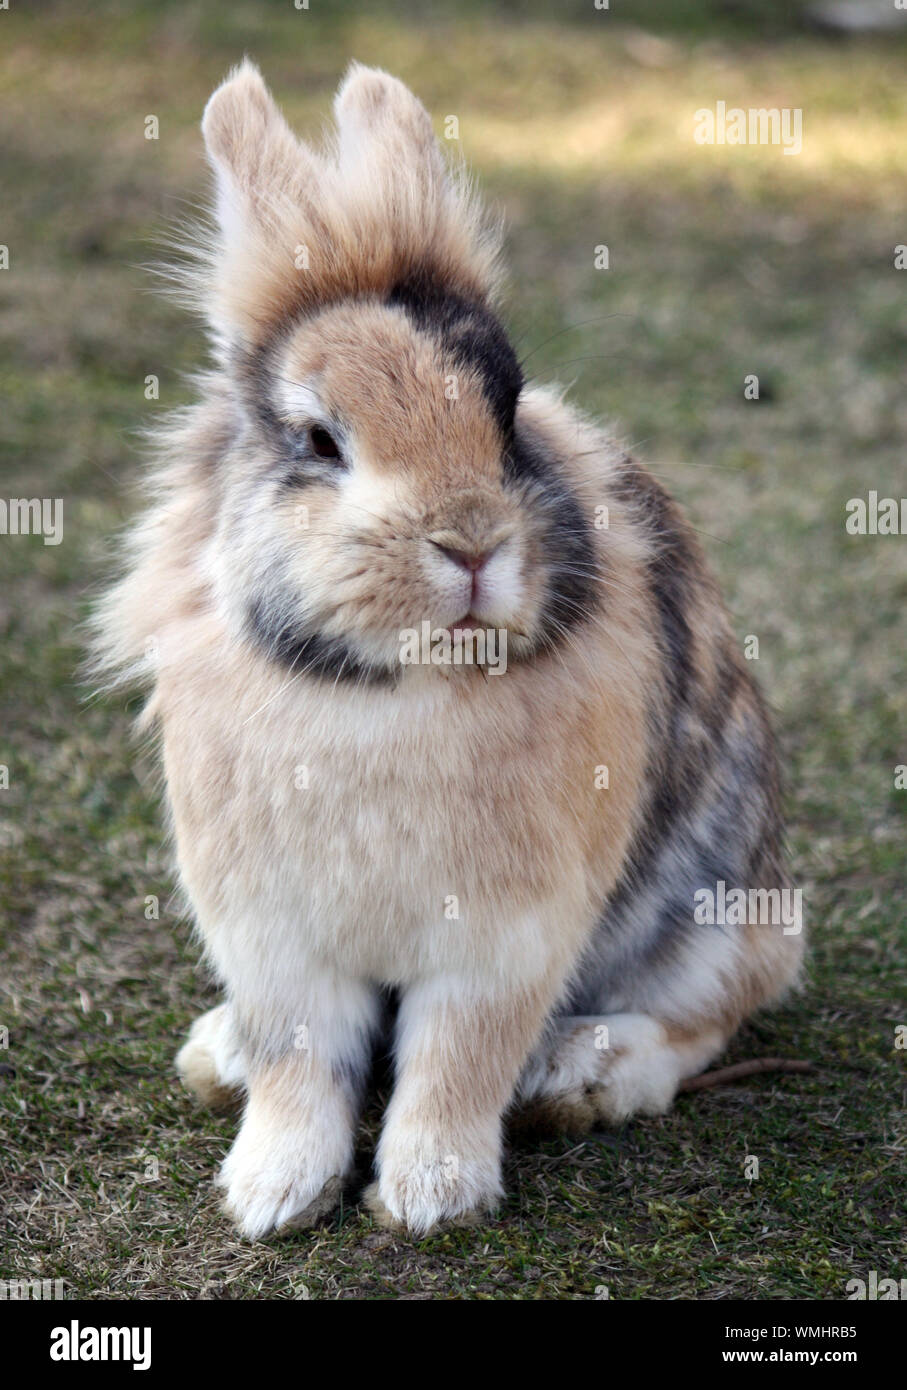 Sweet little bunny (süßes kuscheliges Kaninchen) Stock Photo